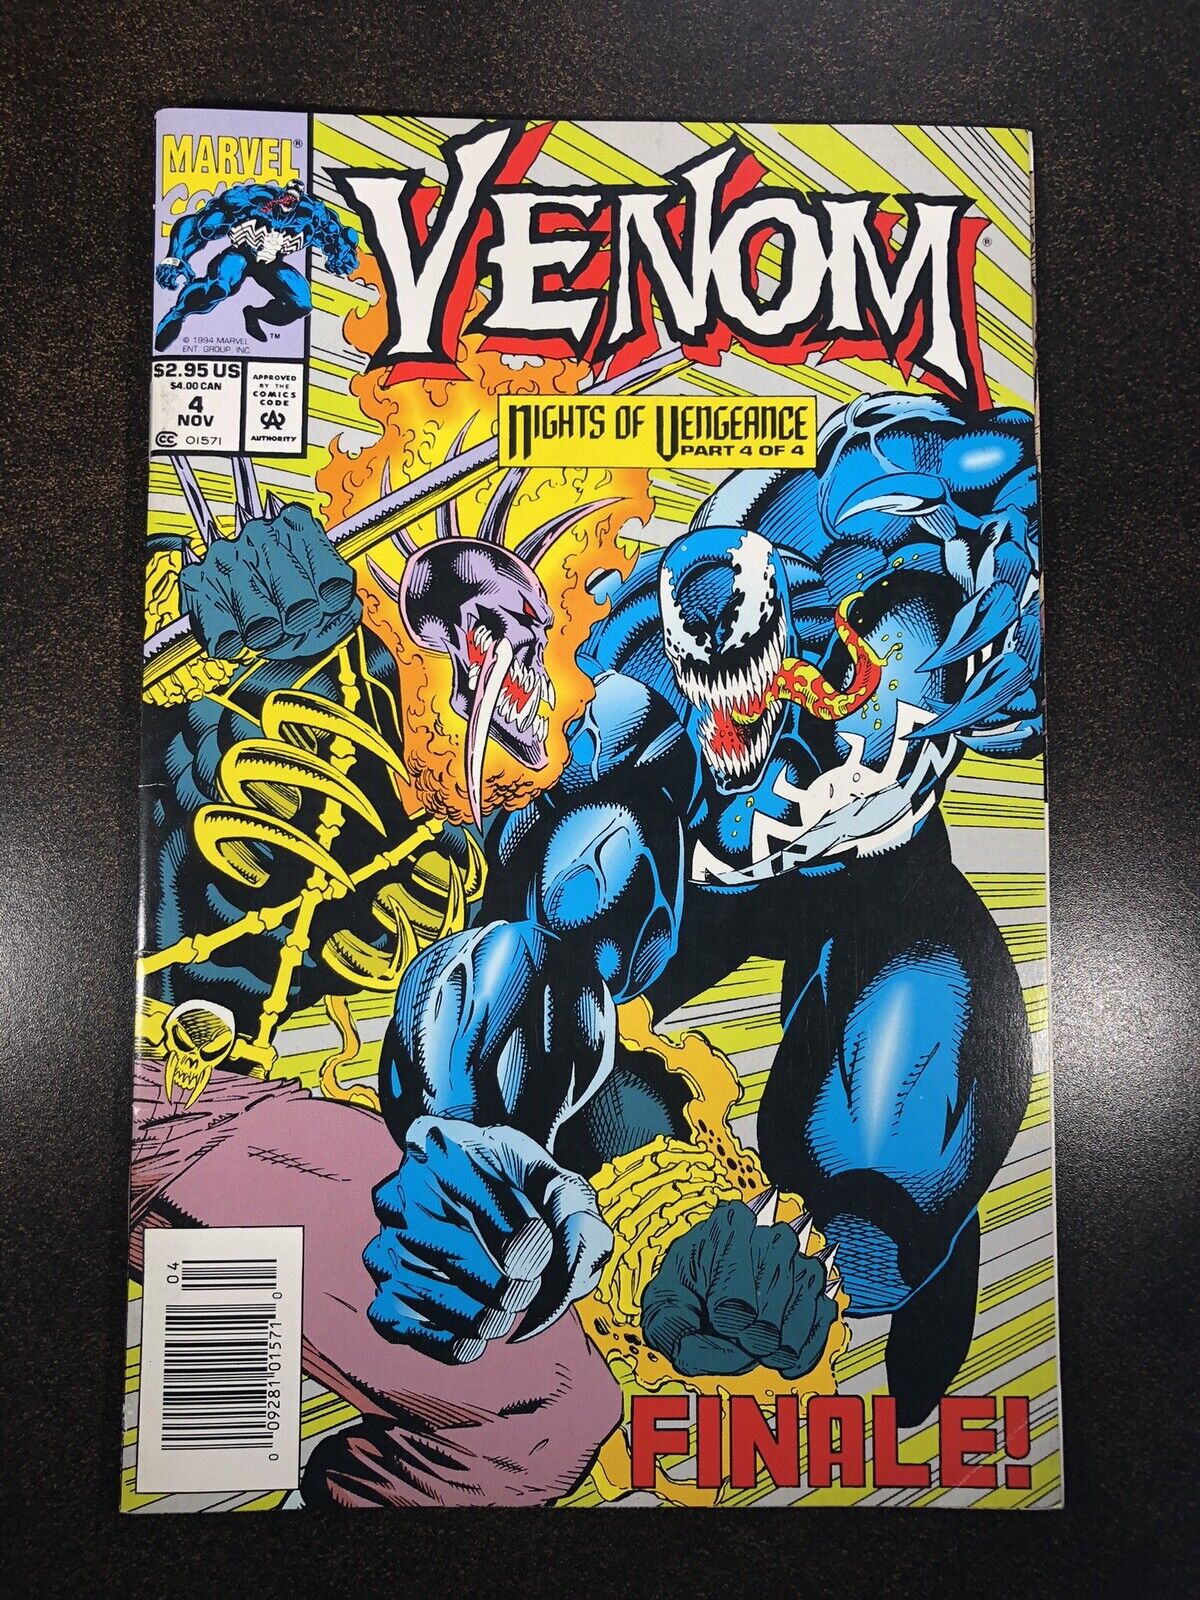 Venom: Nights of Vengeance #4 (Nov 1994, Marvel) - Finale